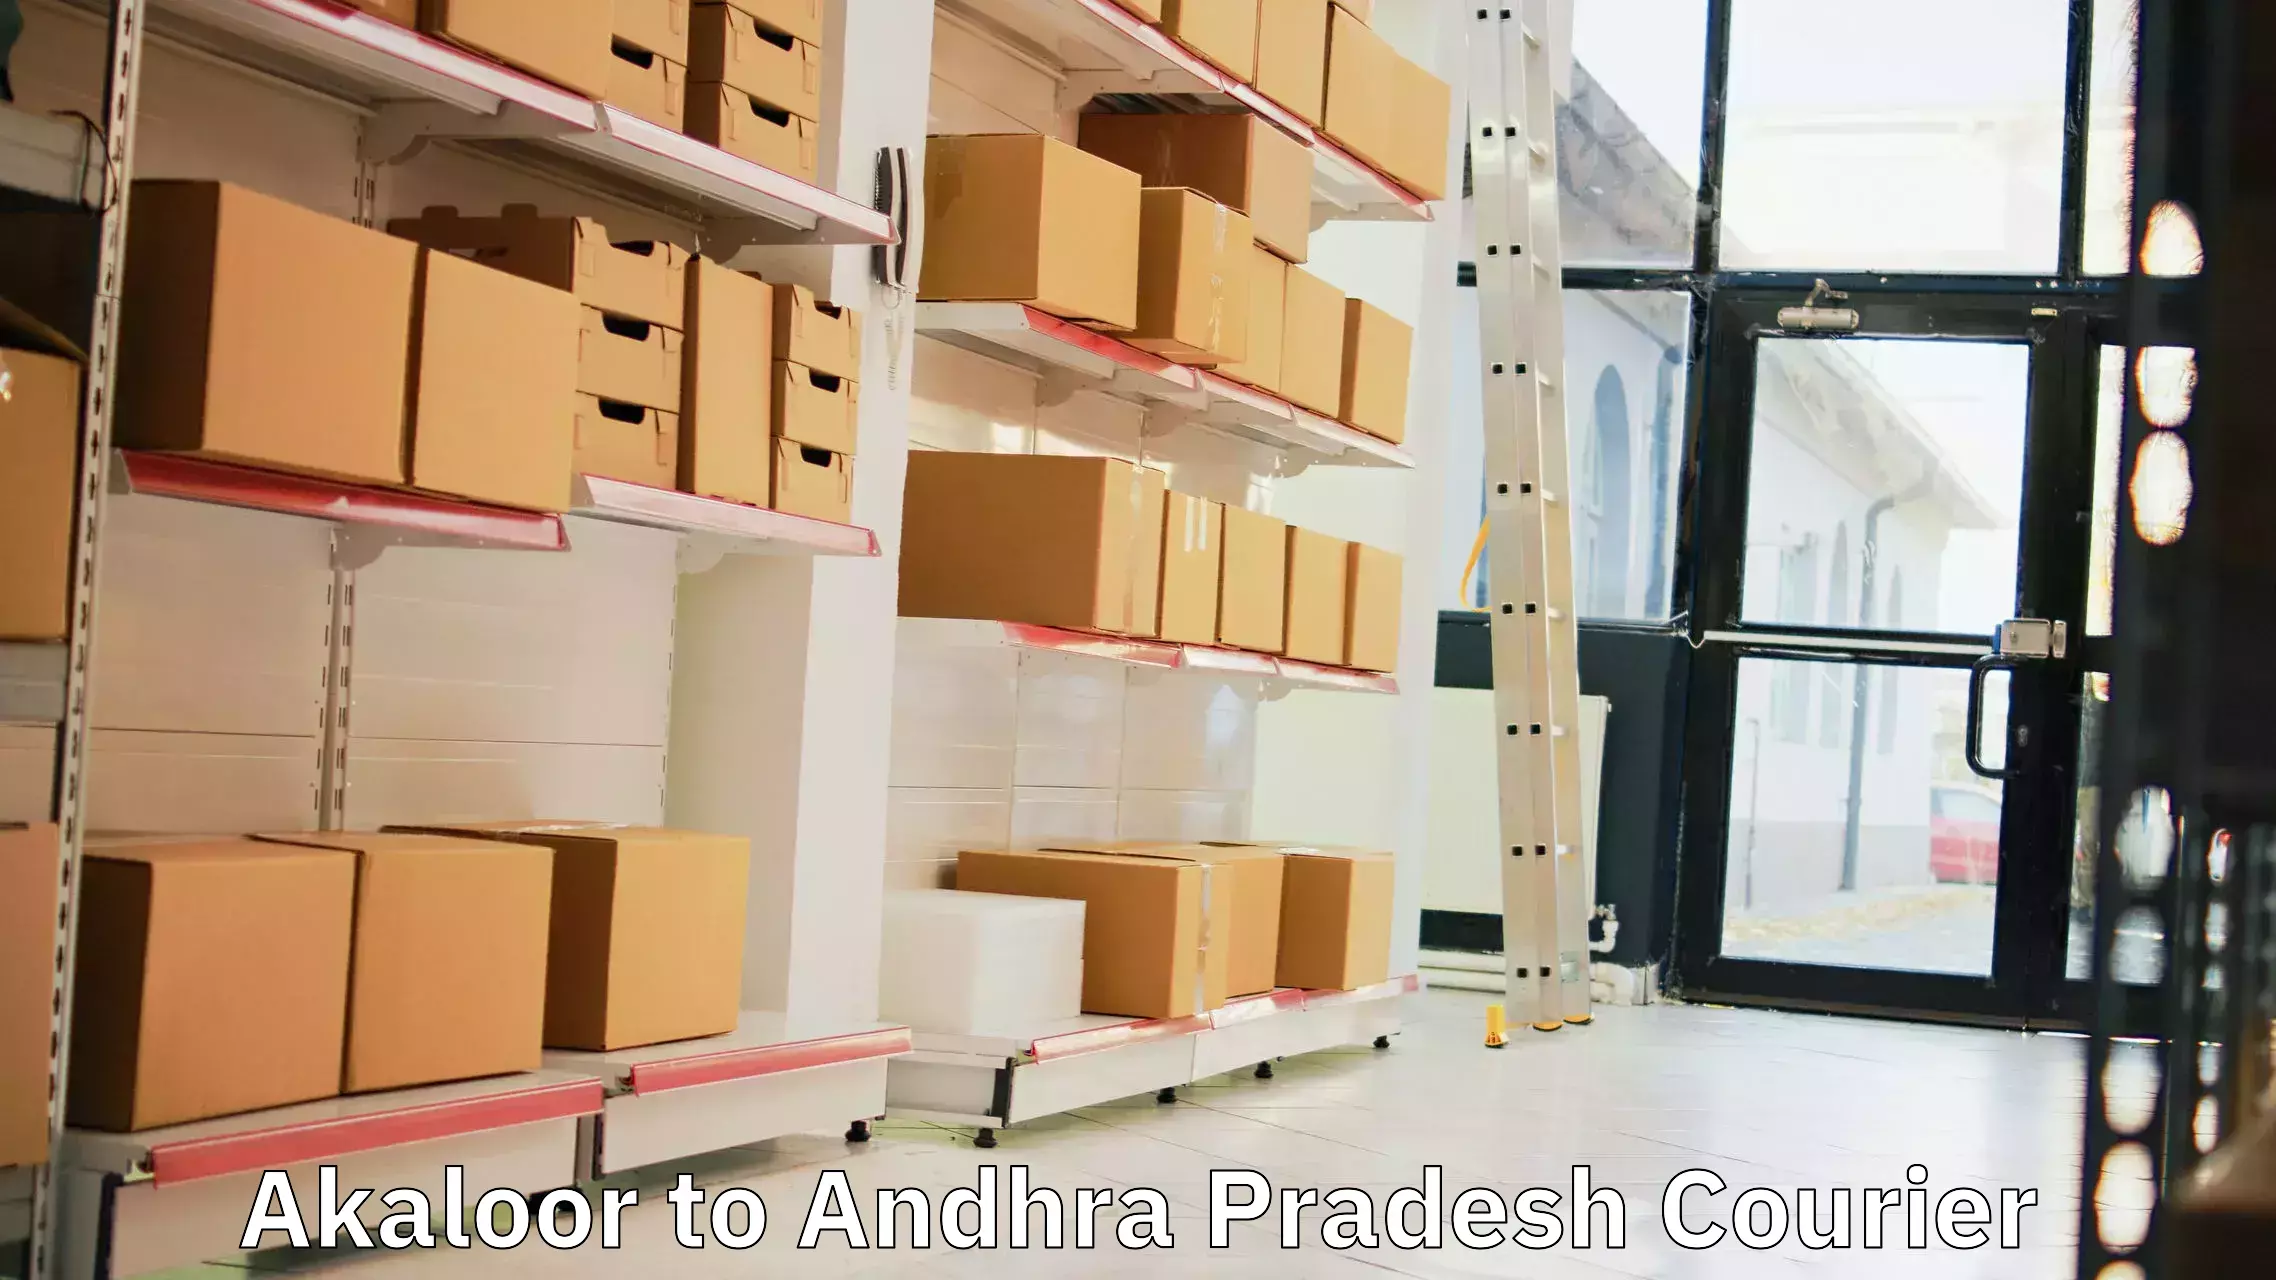 User-friendly delivery service Akaloor to Gudivada